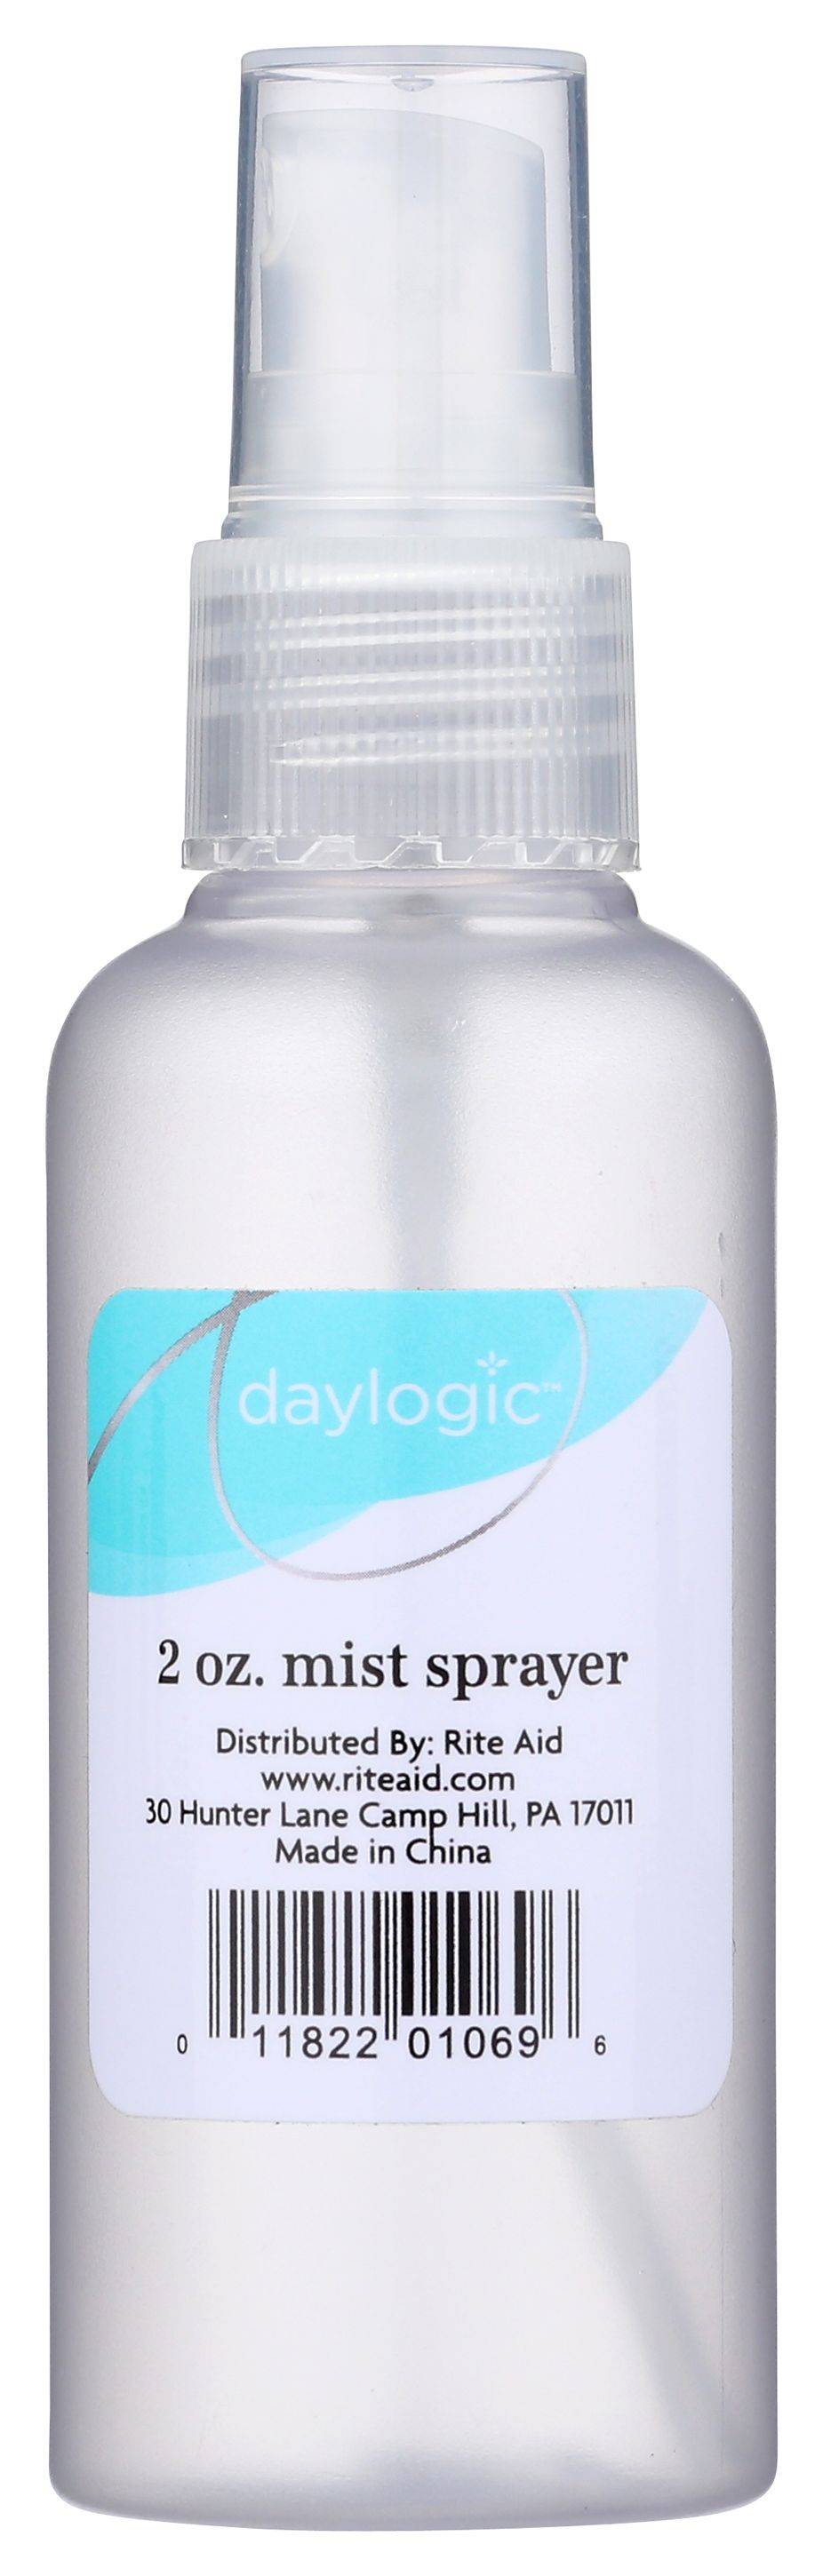 Daylogic Mist Sprayer